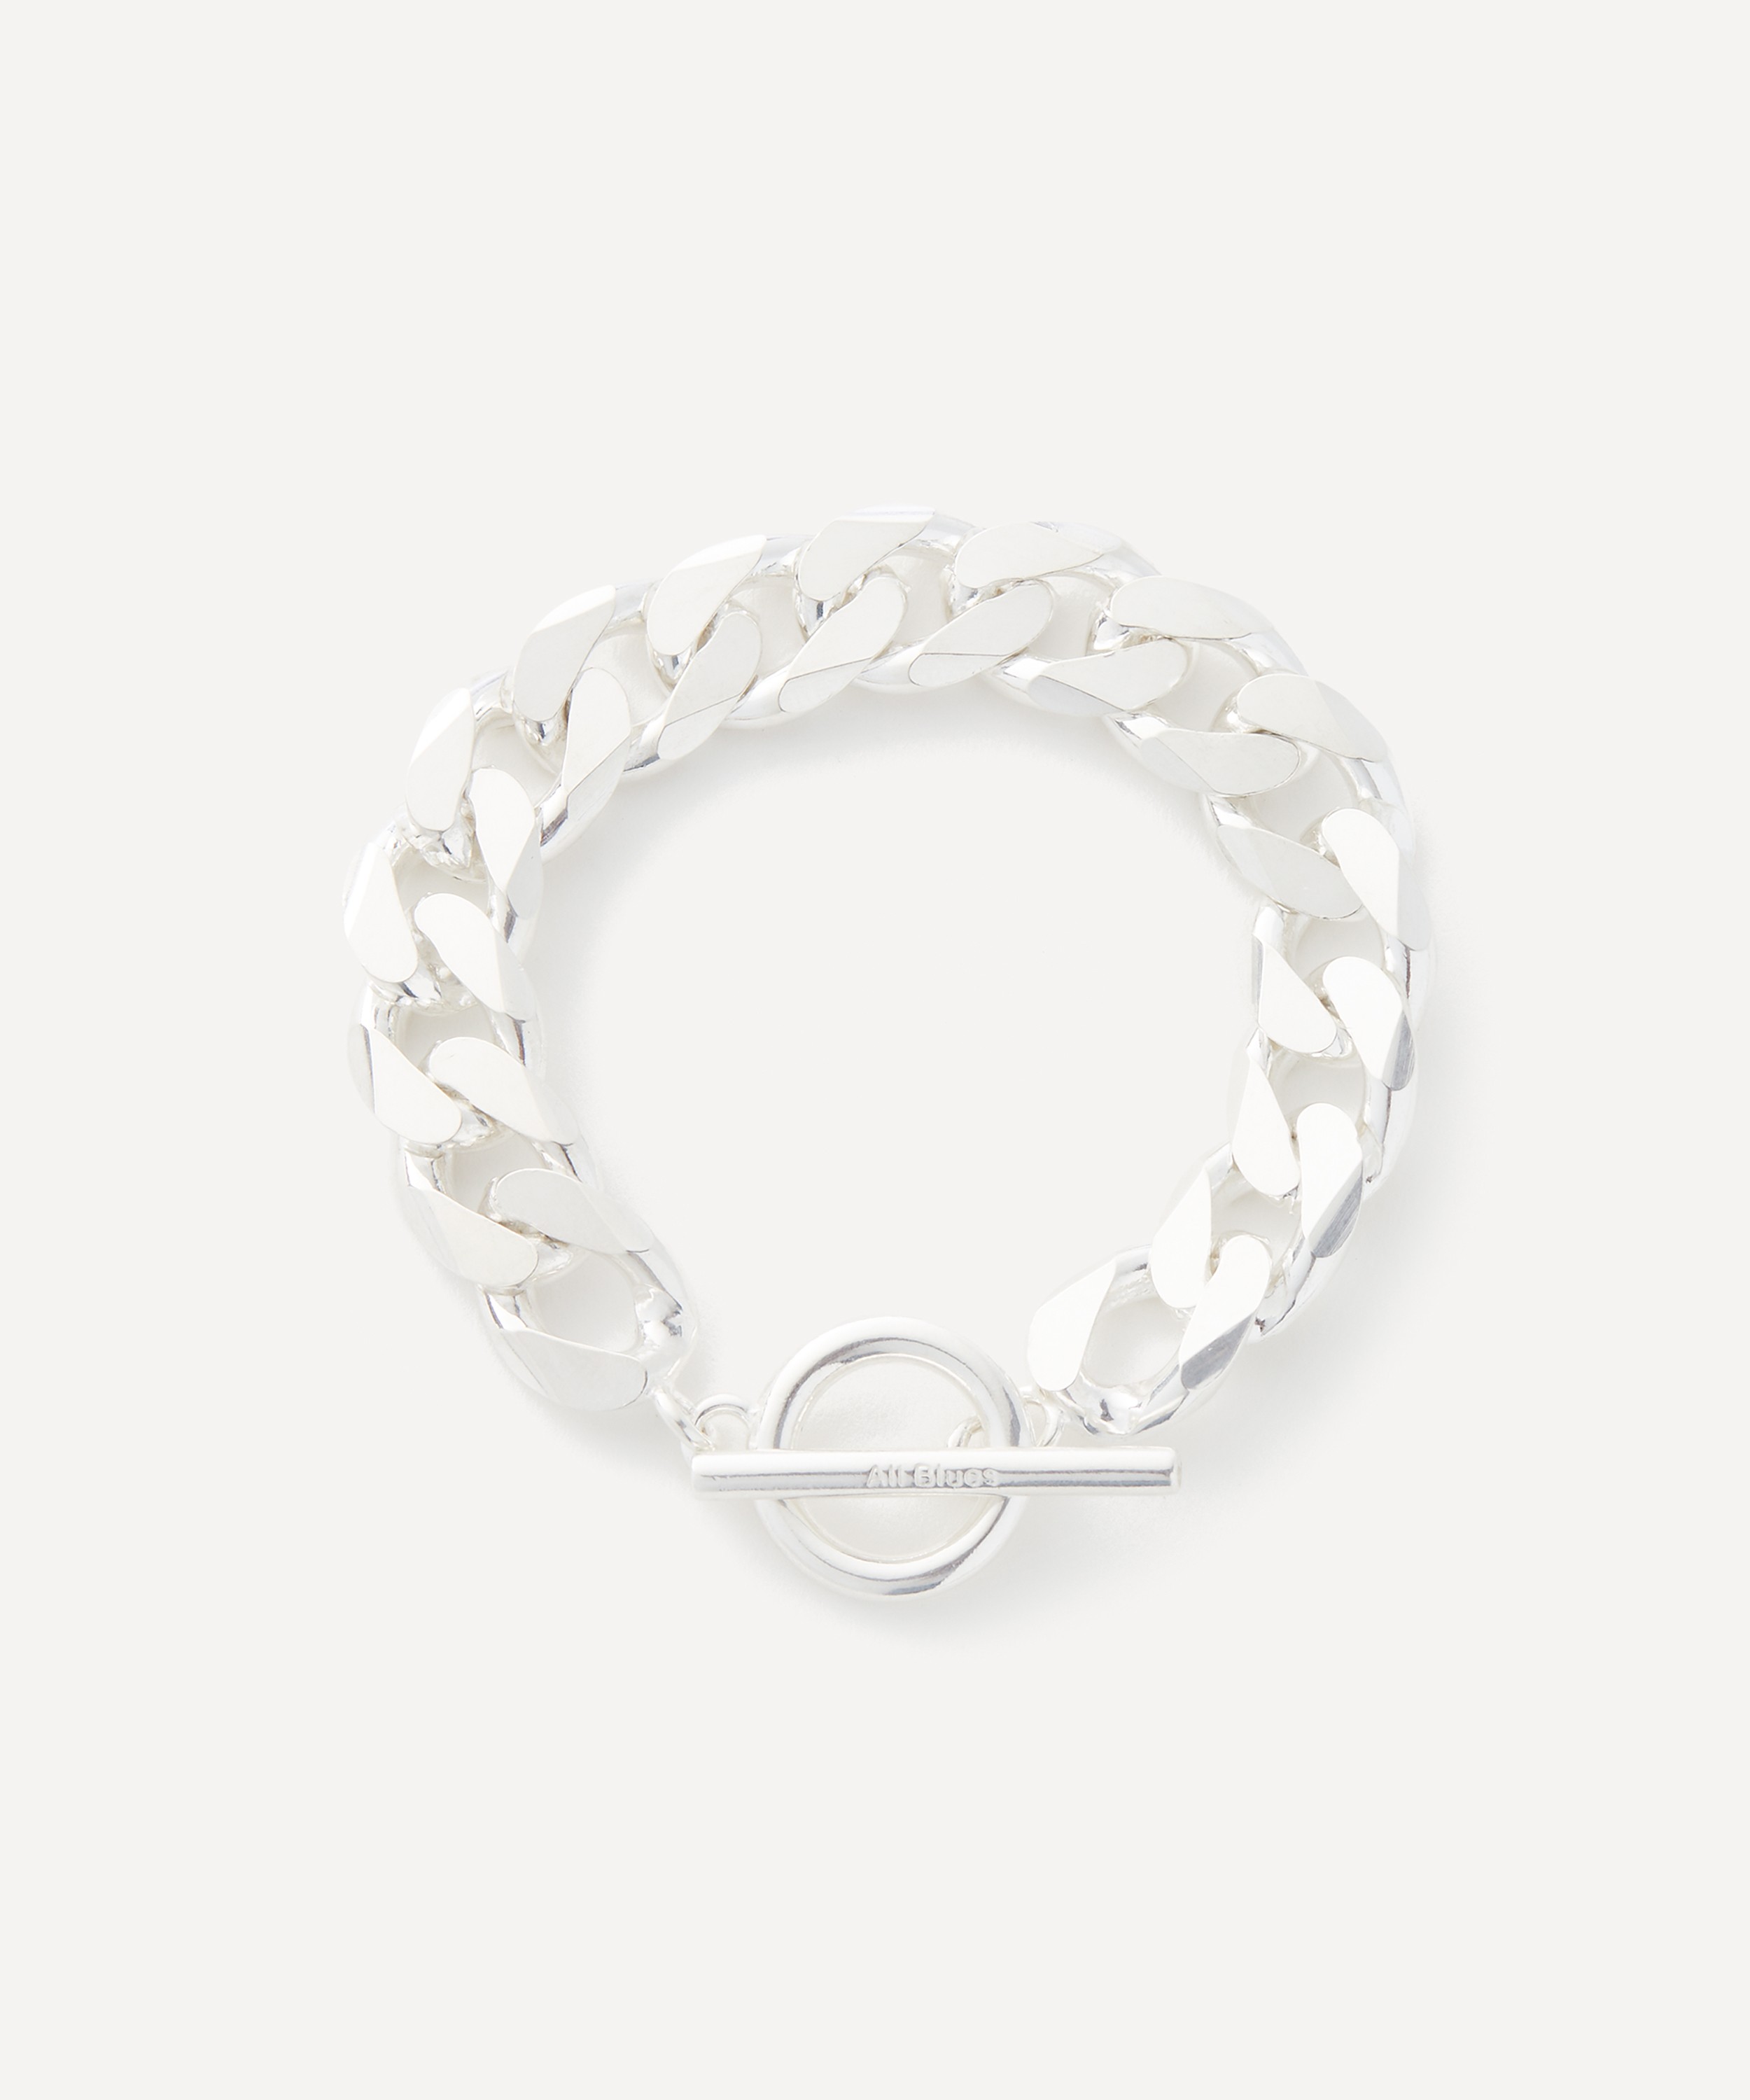 Chunky 925 Sterling Silver Chain Link Bracelet Geometric 